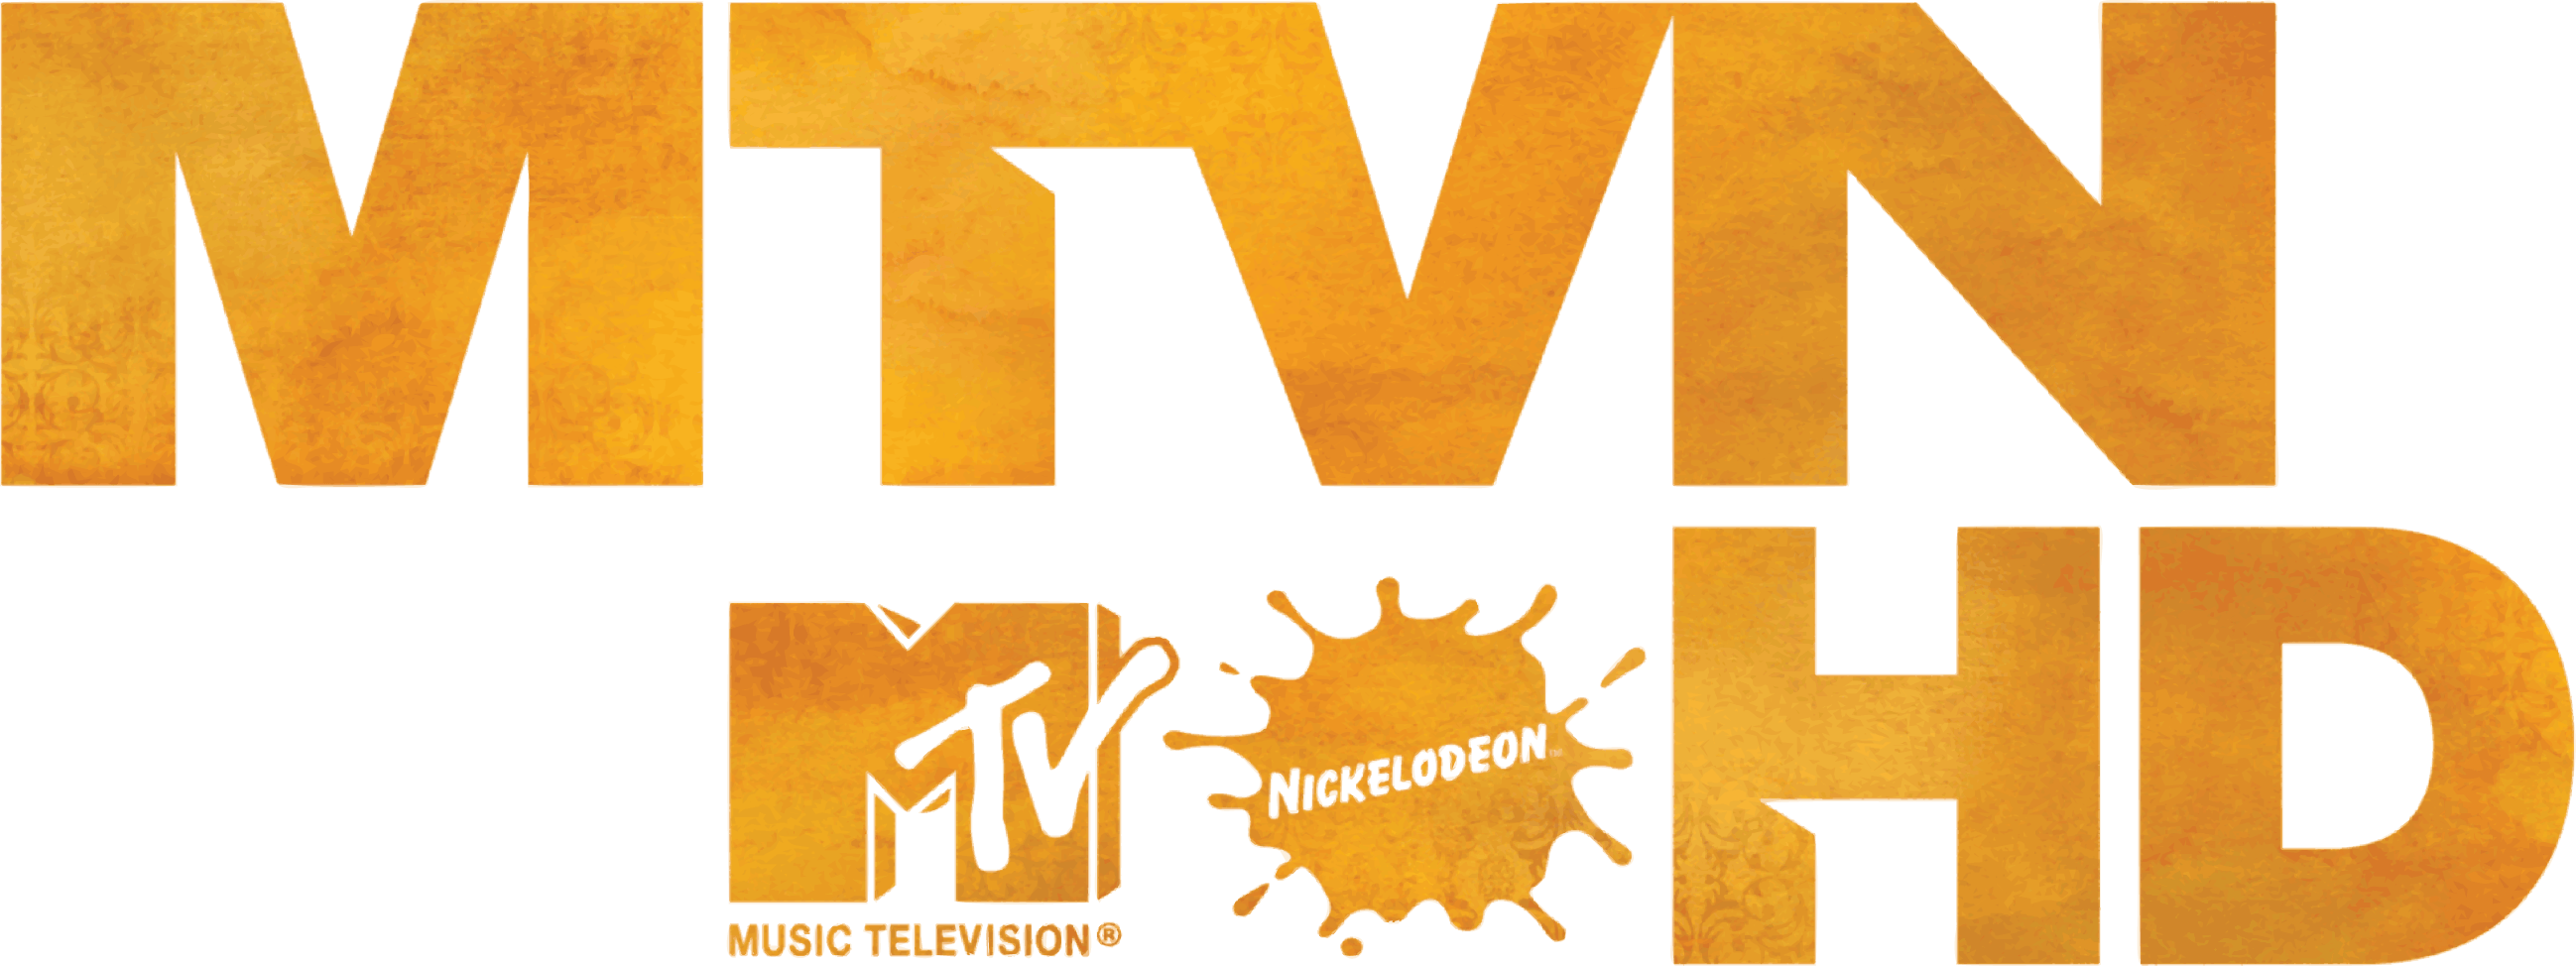 Nick HD Logo - MTV Live (International) | Logopedia | FANDOM powered by Wikia